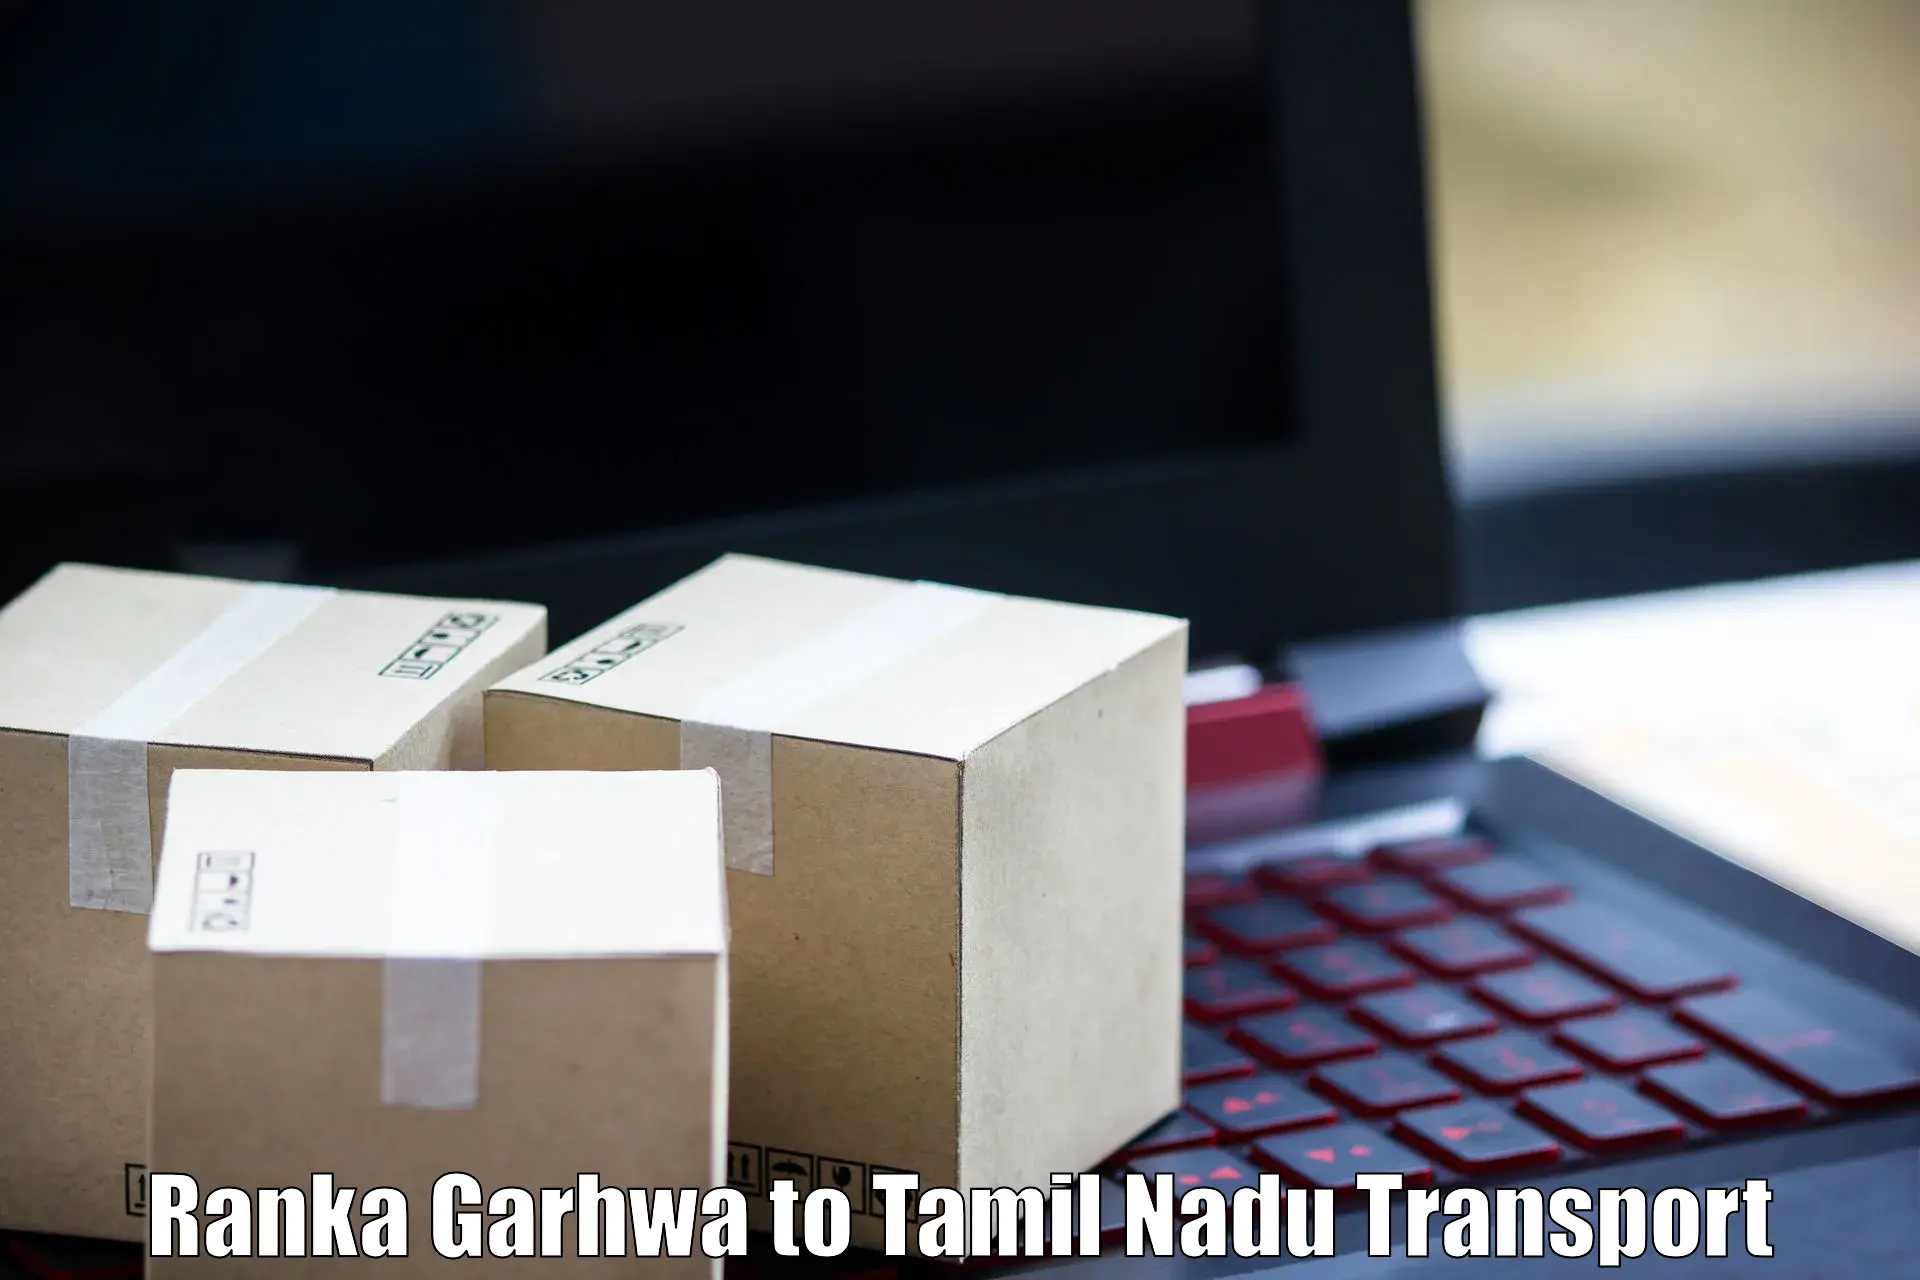 Nearby transport service Ranka Garhwa to Thiruvadanai